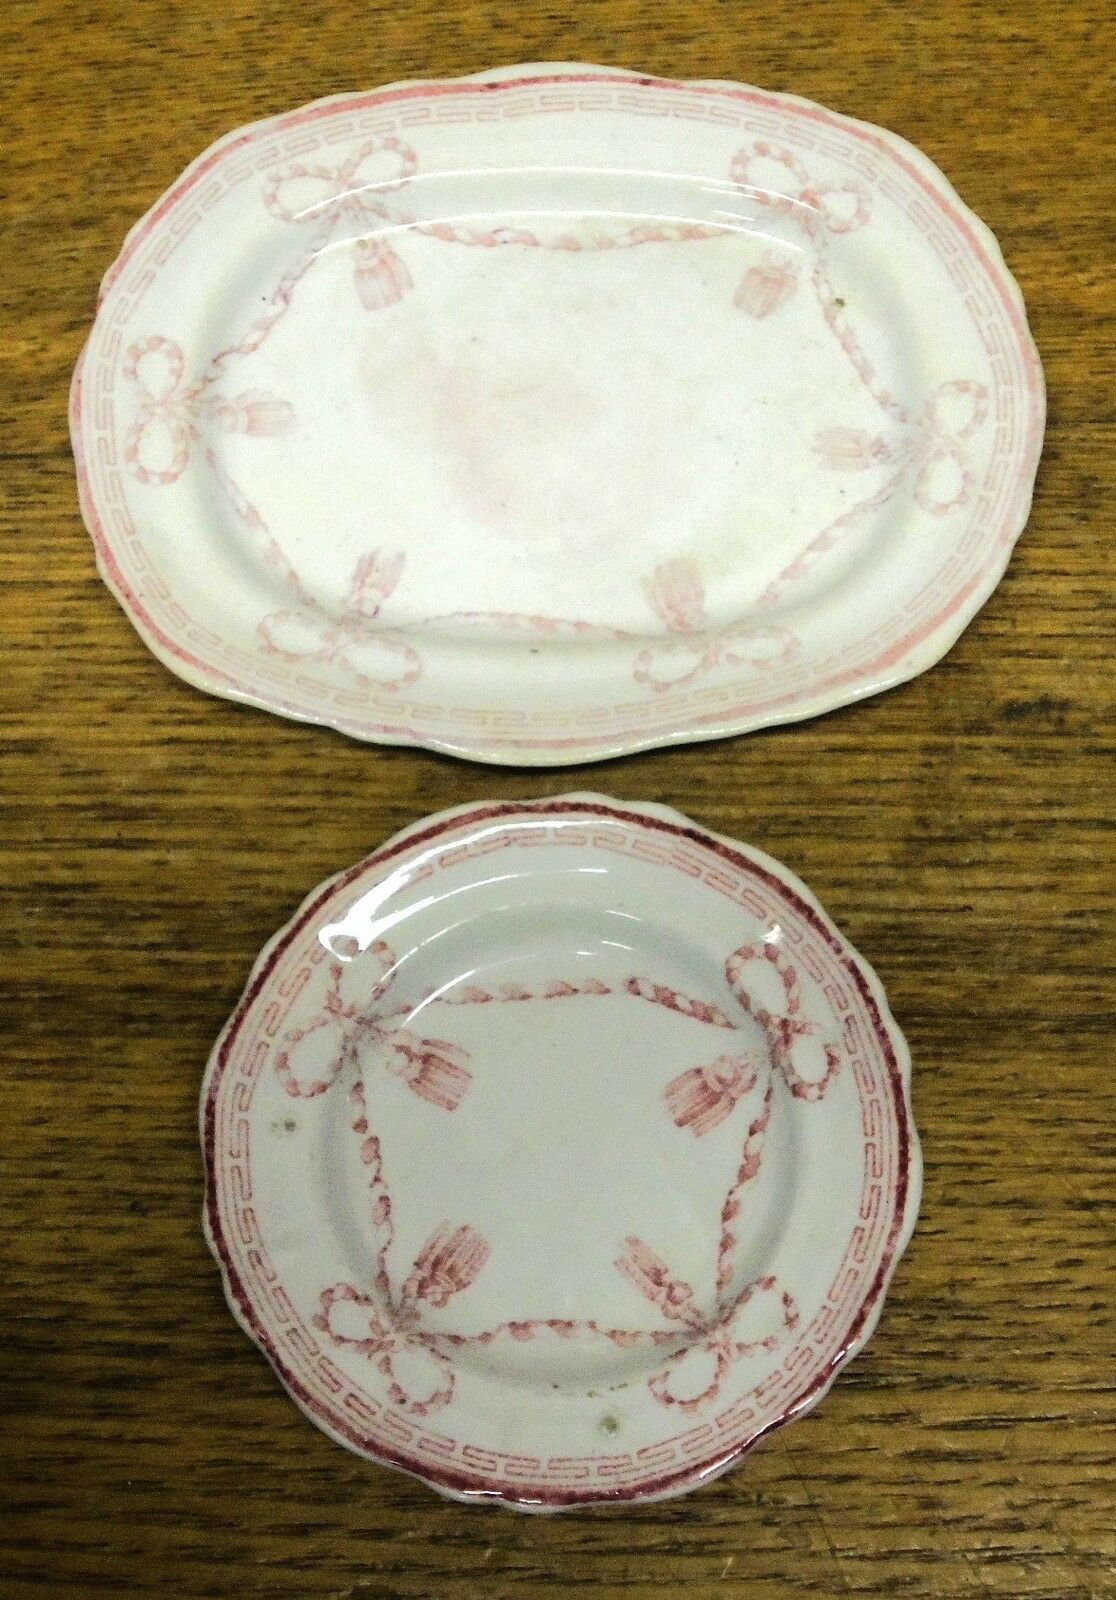 2 MINIATURES - Antique Red Transfer Platter & Plate